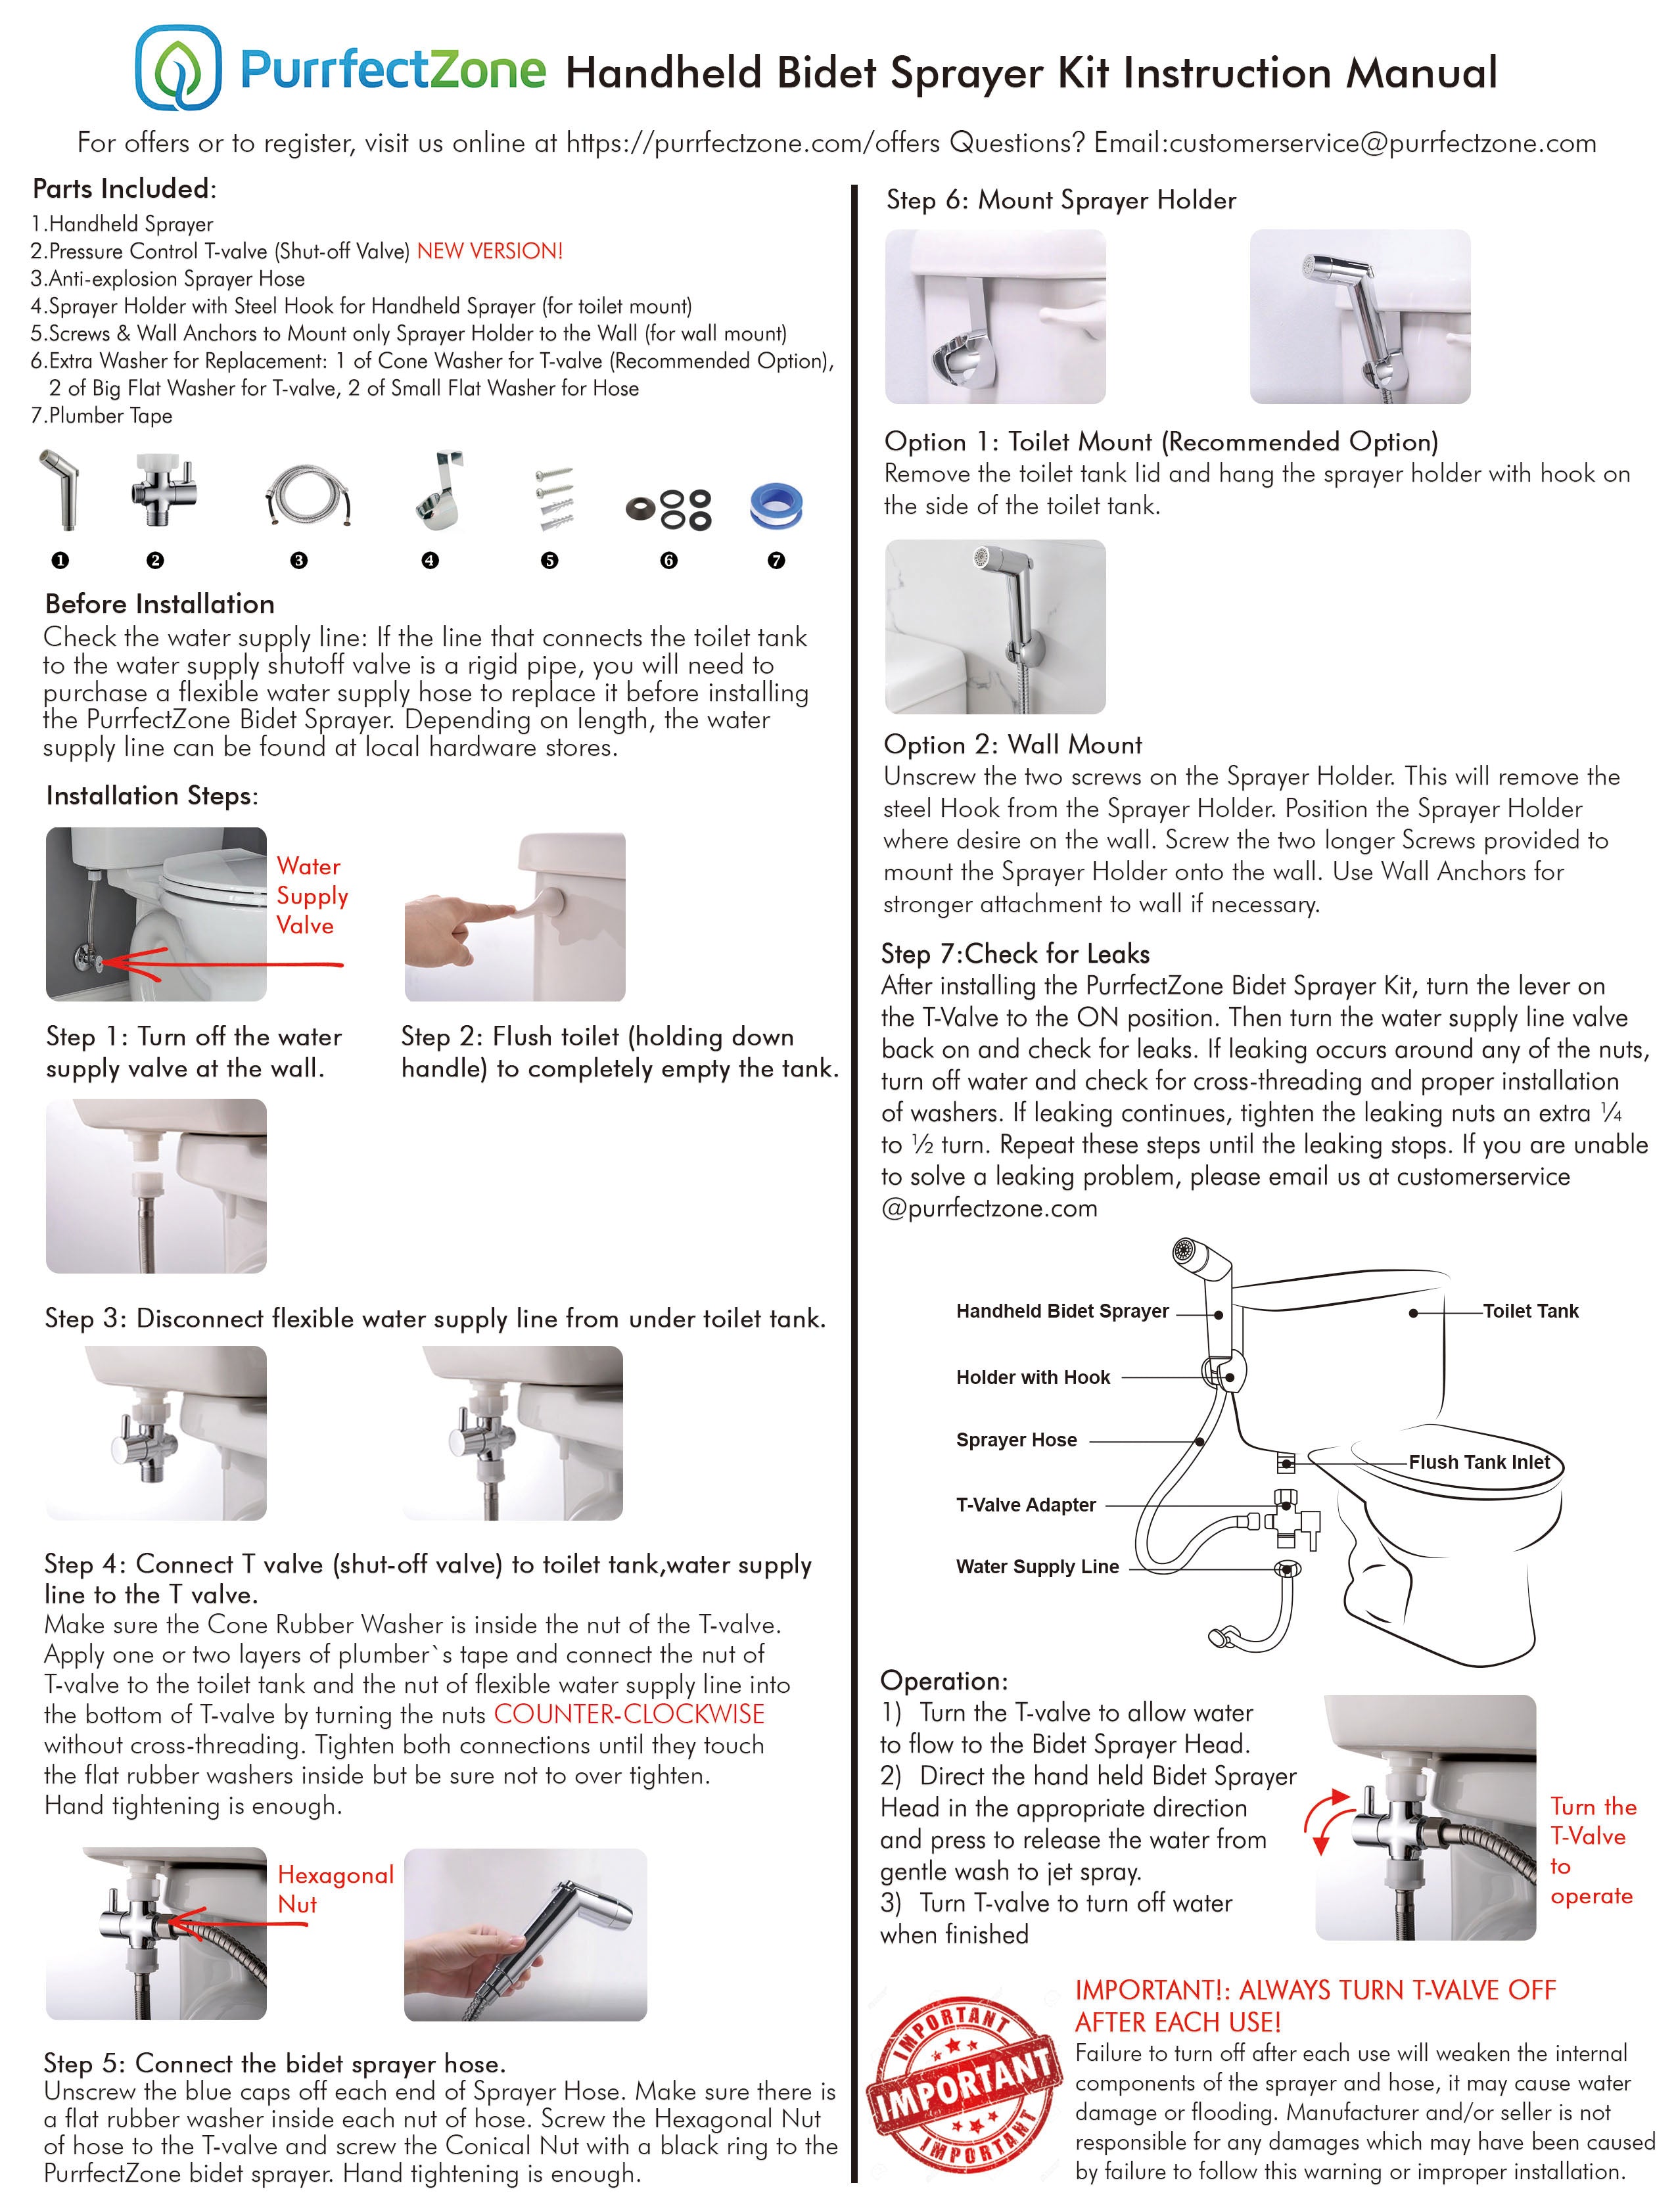 Mode Sprayer Kit Manual Installation